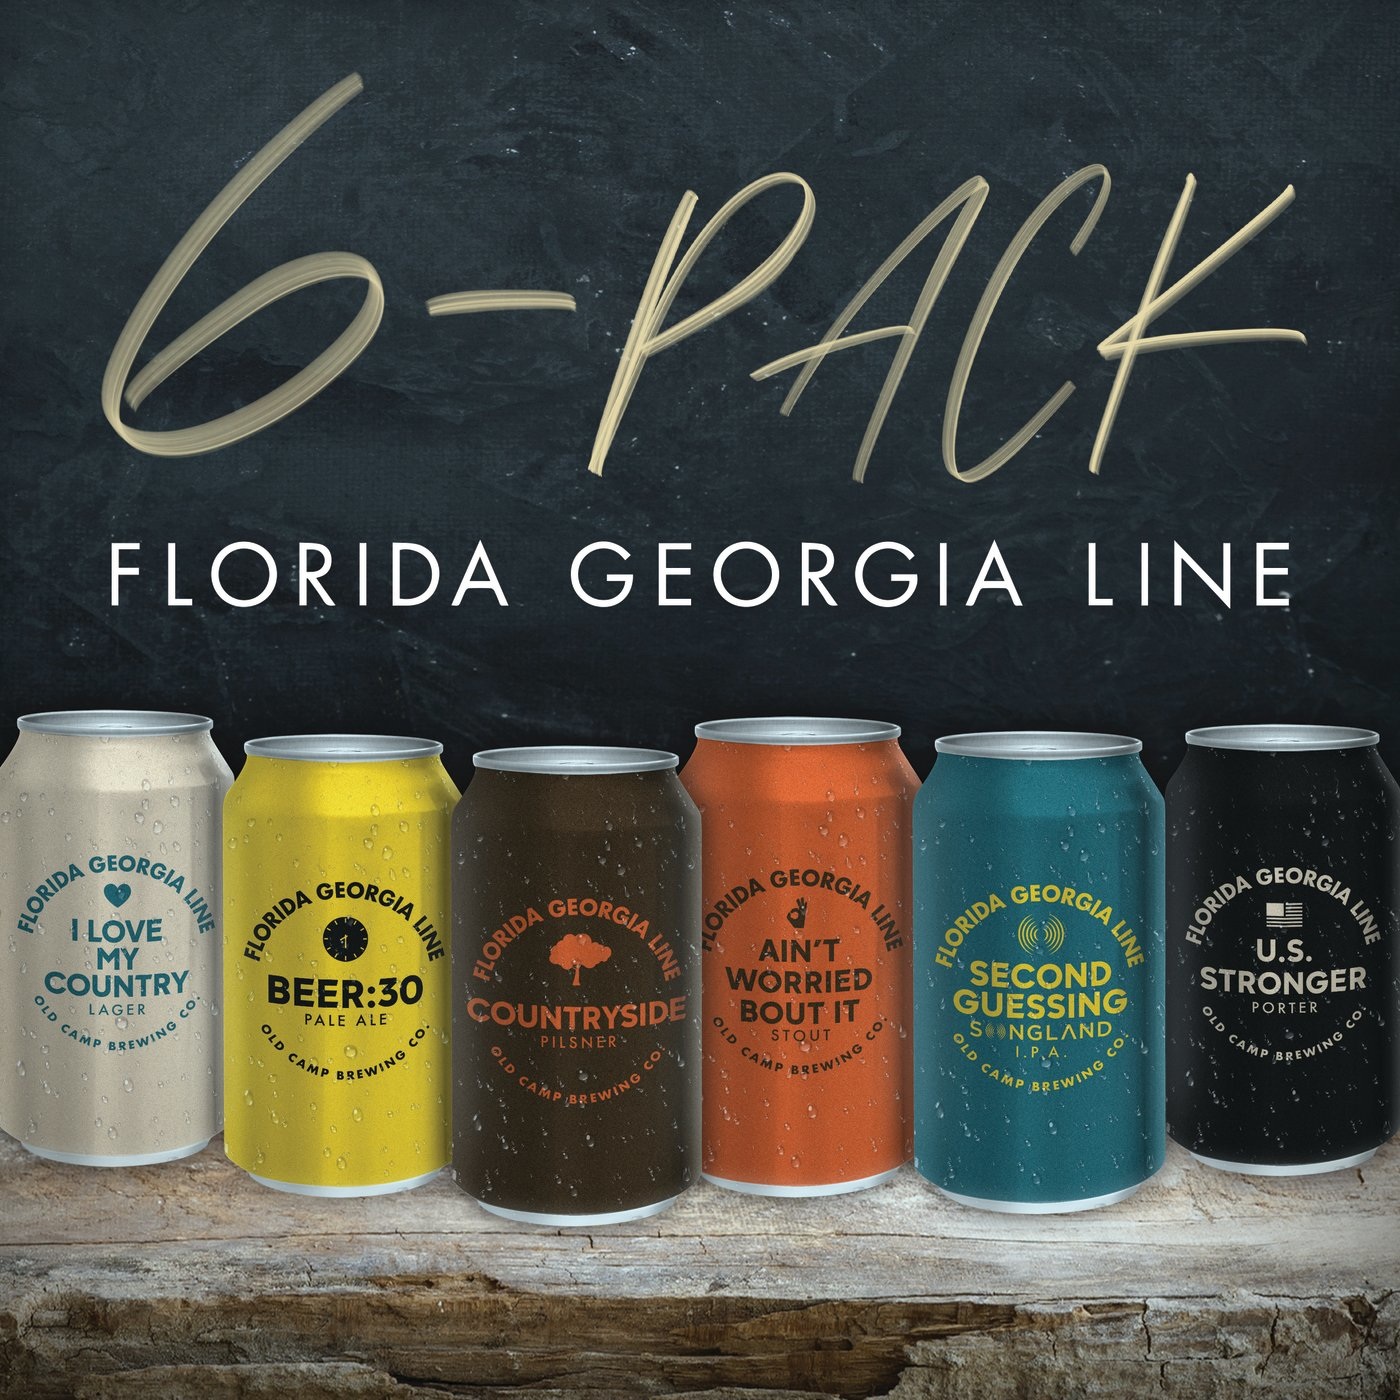 Florida Georgia Line - Beer30